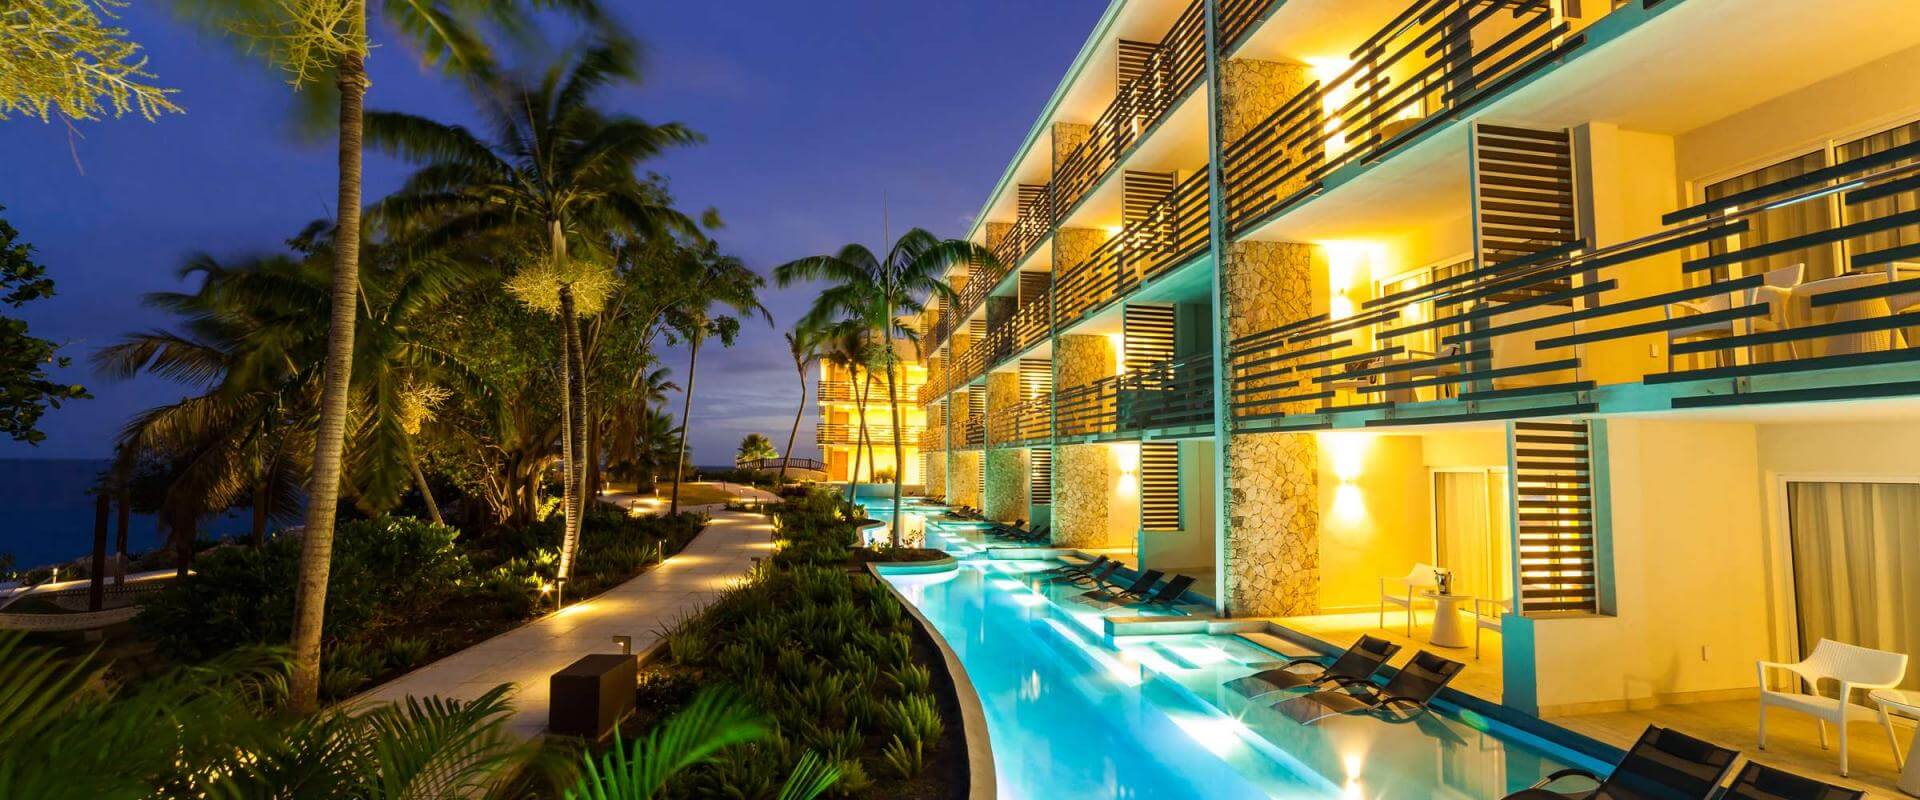 Sonesta Resorts St Maarten expands use of Agilysys solutions